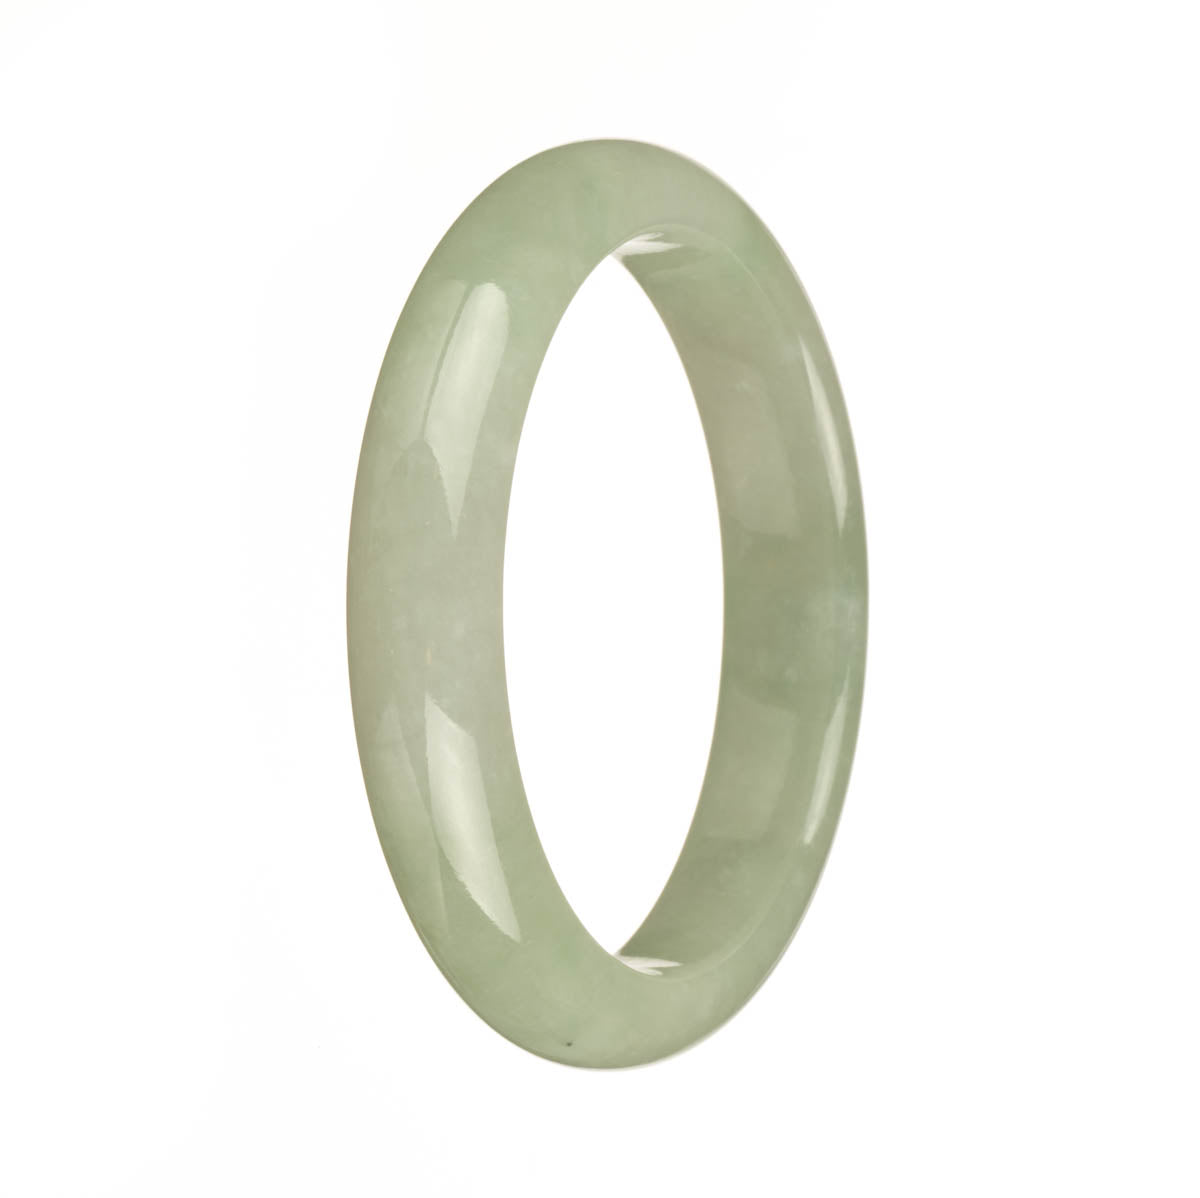 Certified Grade A Green Burmese Jade Bangle Bracelet - 59mm Half Moon